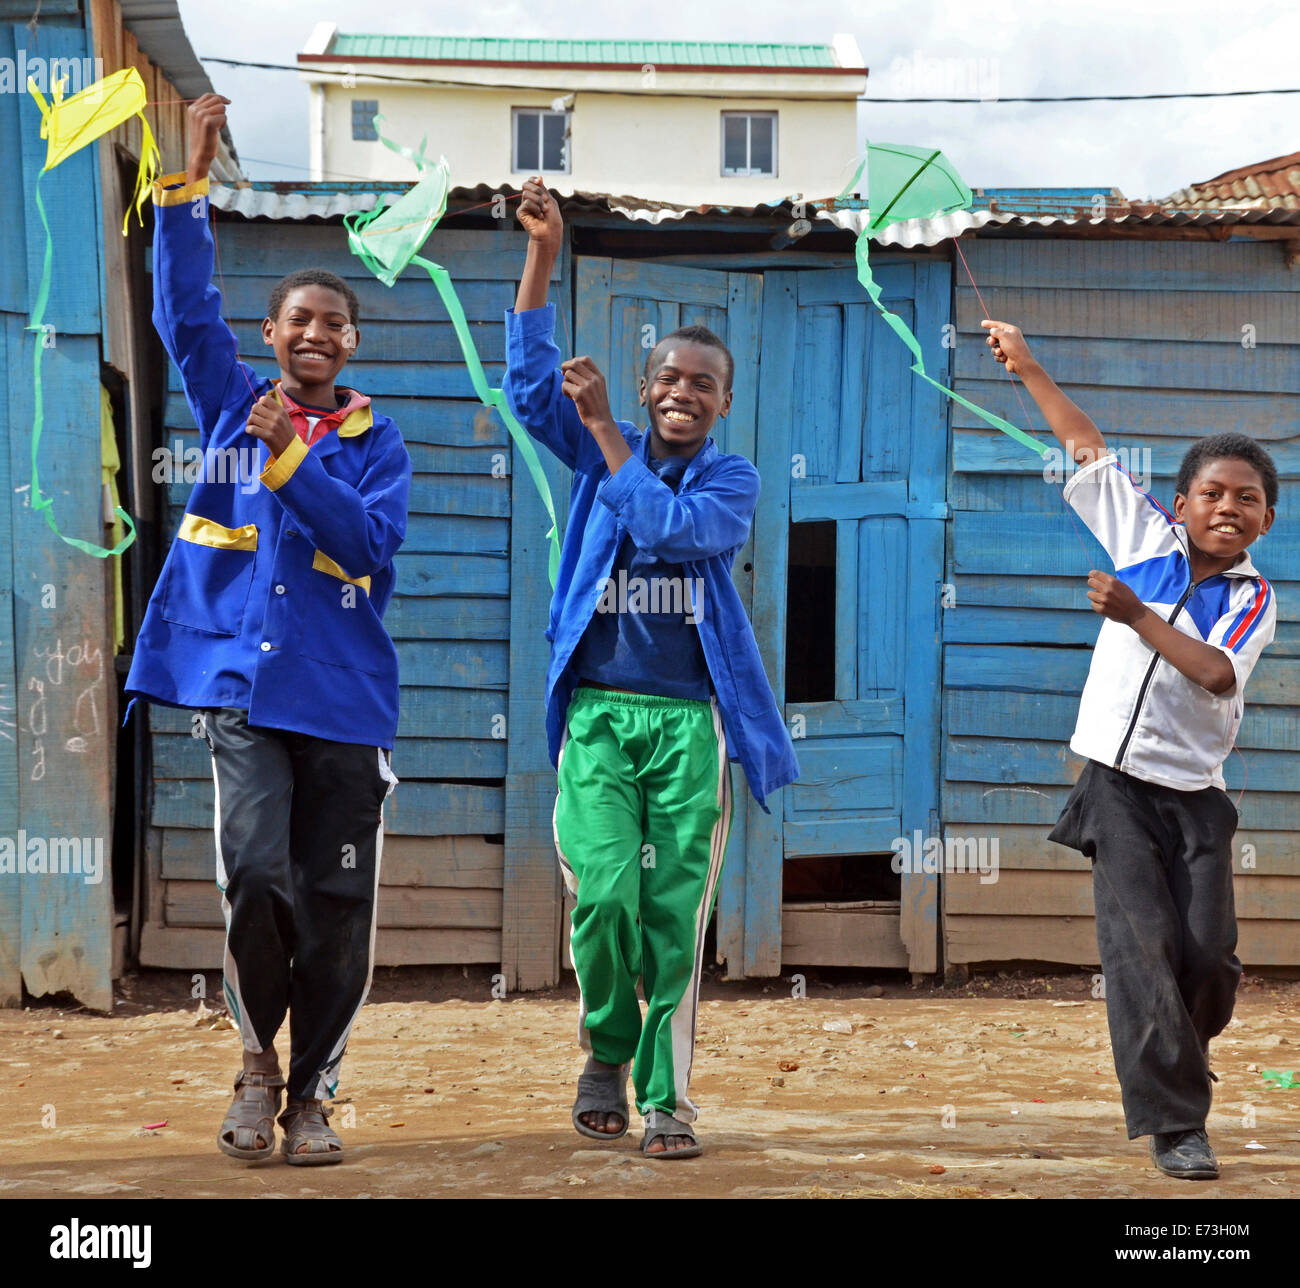 Madagascar, Antananarivo, 3 boys flying a kit in the courtyard of school. Stock Photo